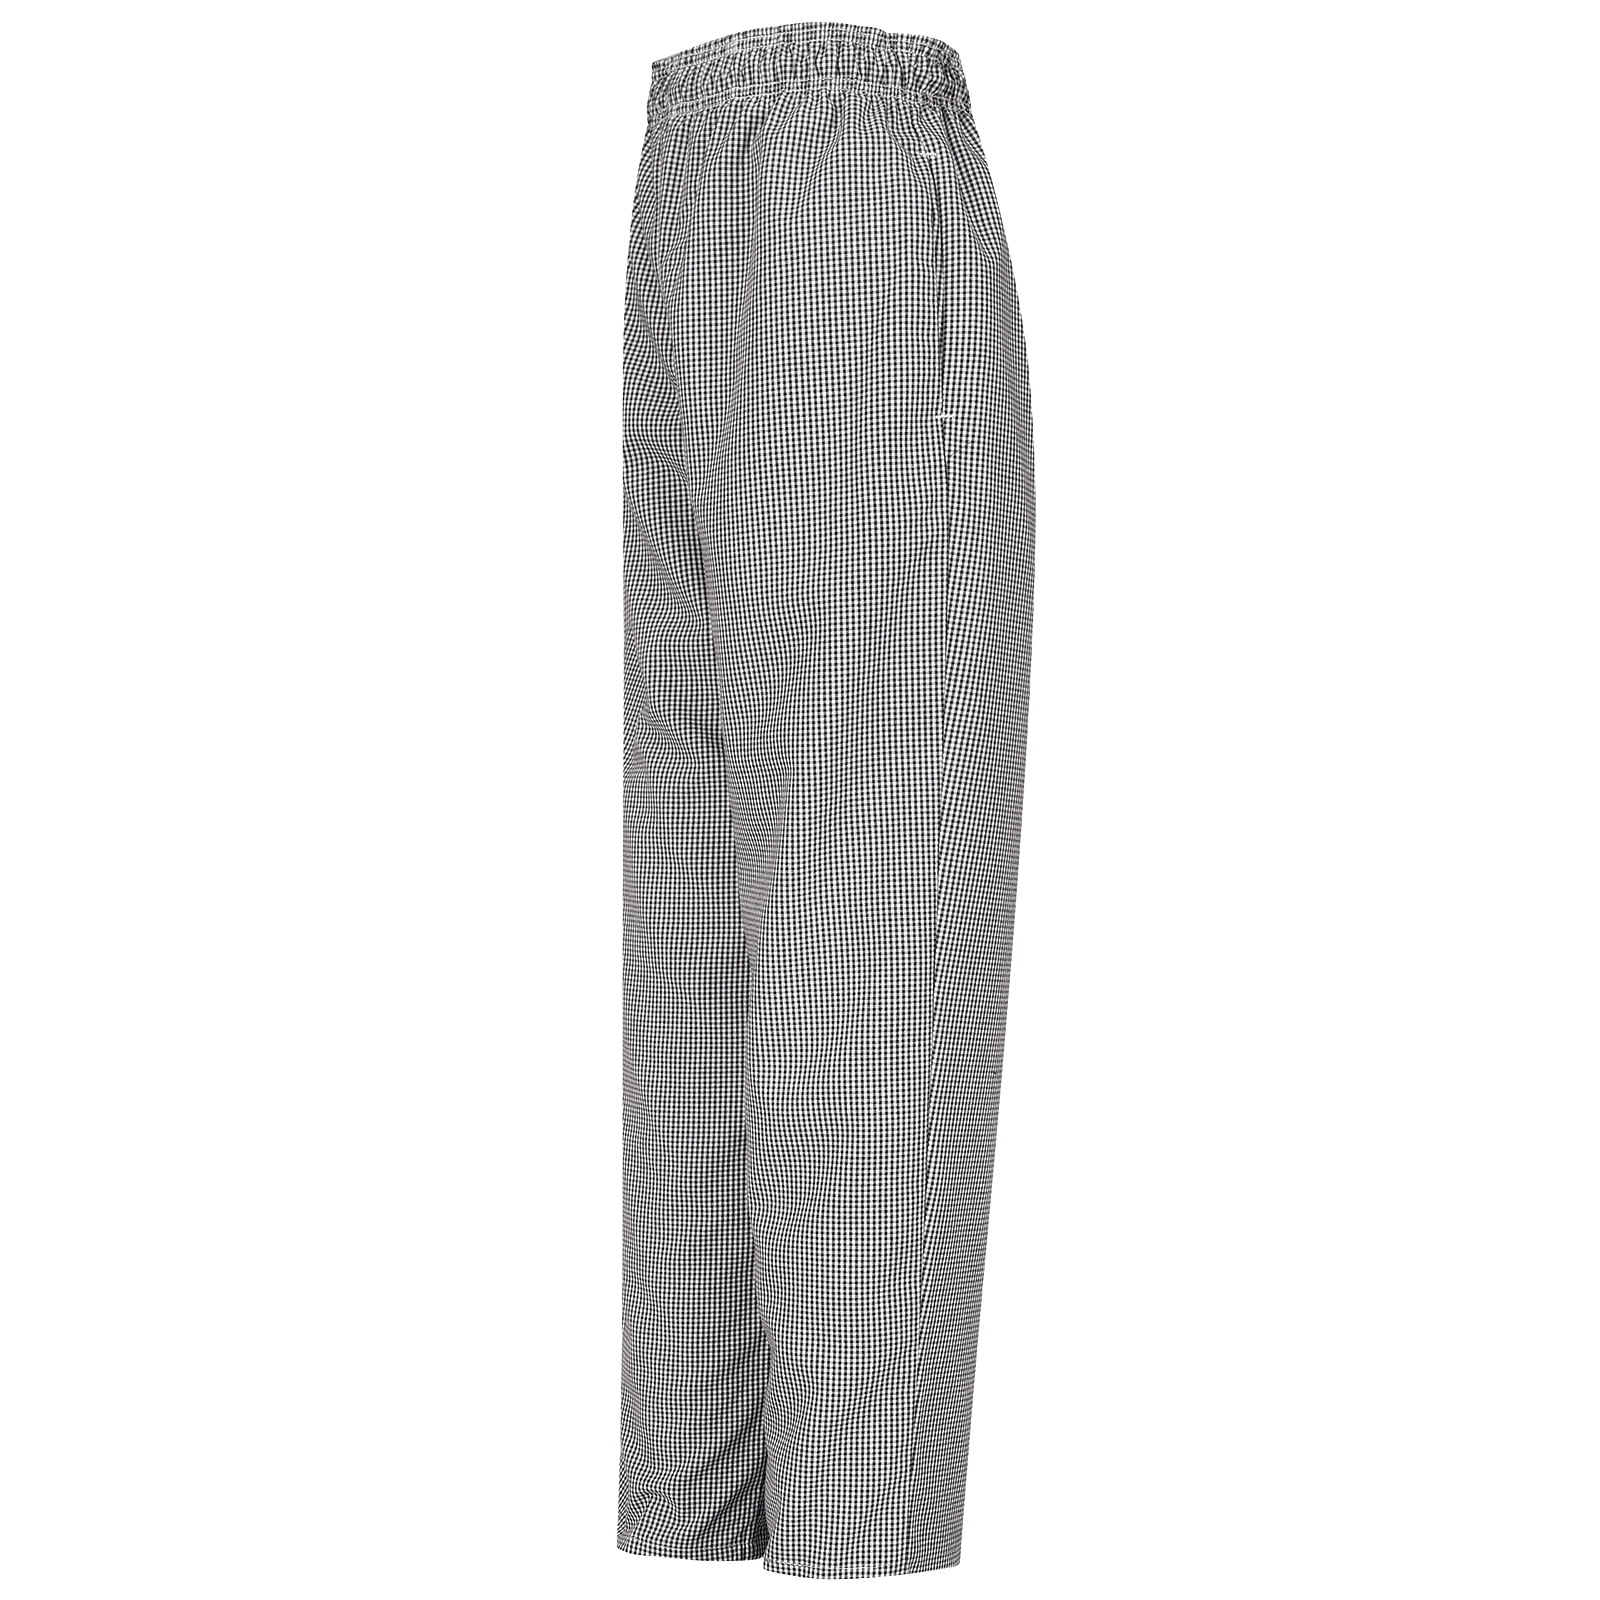 Chef Designs Baggy Chef Pants Men's PS54 100% Spun Polyester Work Uniform 